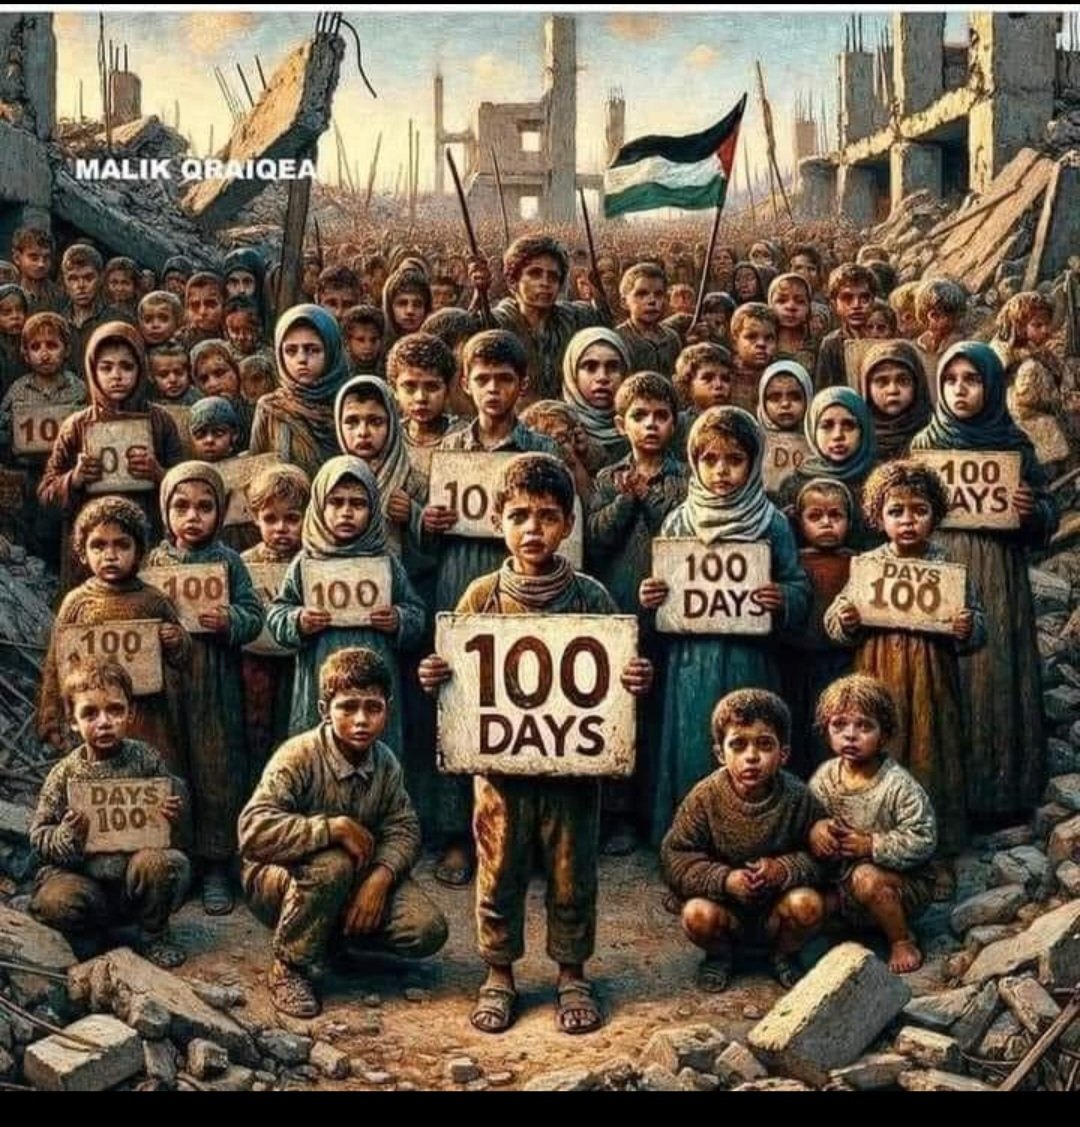 We will Never forget .💔 We will NEVER stop sharing ᖴᖇᗴᗴ ᑭᗩᒪᗴSTIᑎᗴ !!🇵🇸 #ChildrenKillers #GazaUnderAttack #GazaGenocide #WarCrimesInGaza